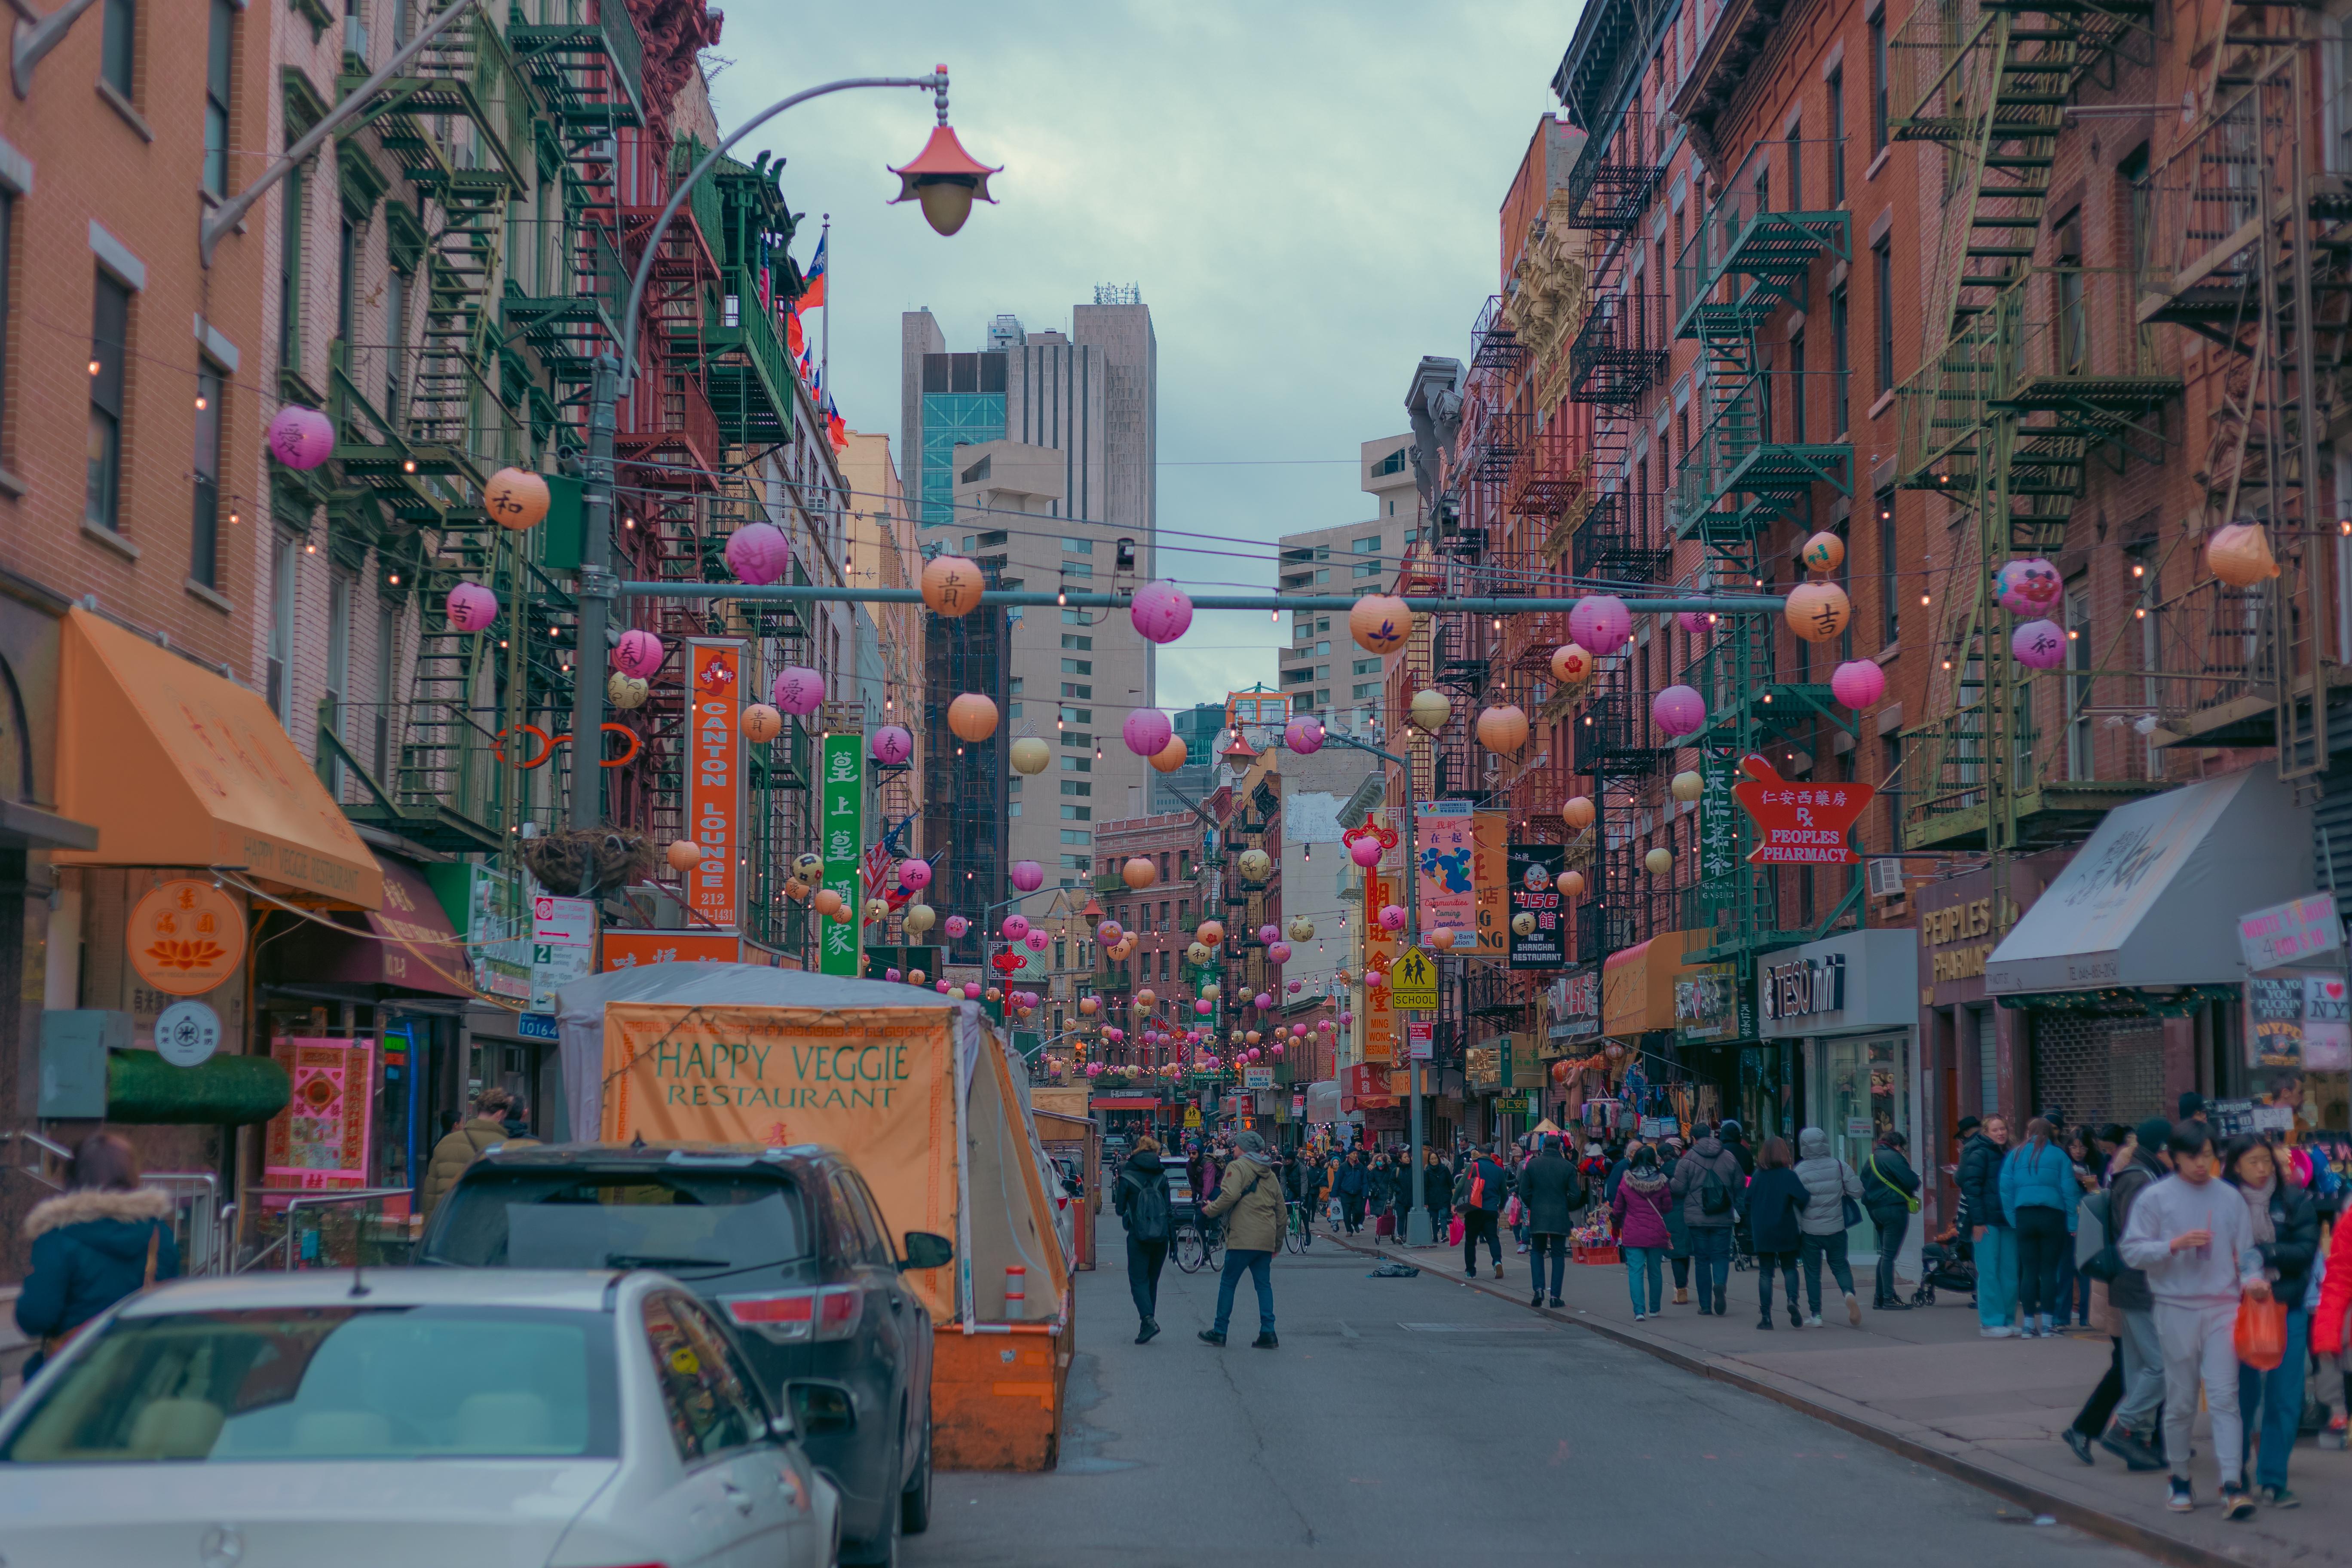 Chinatown NYC (Chinatown, Big Apple, New York City, NYC, Lampions, Colorful) - Photograph by David Pugh